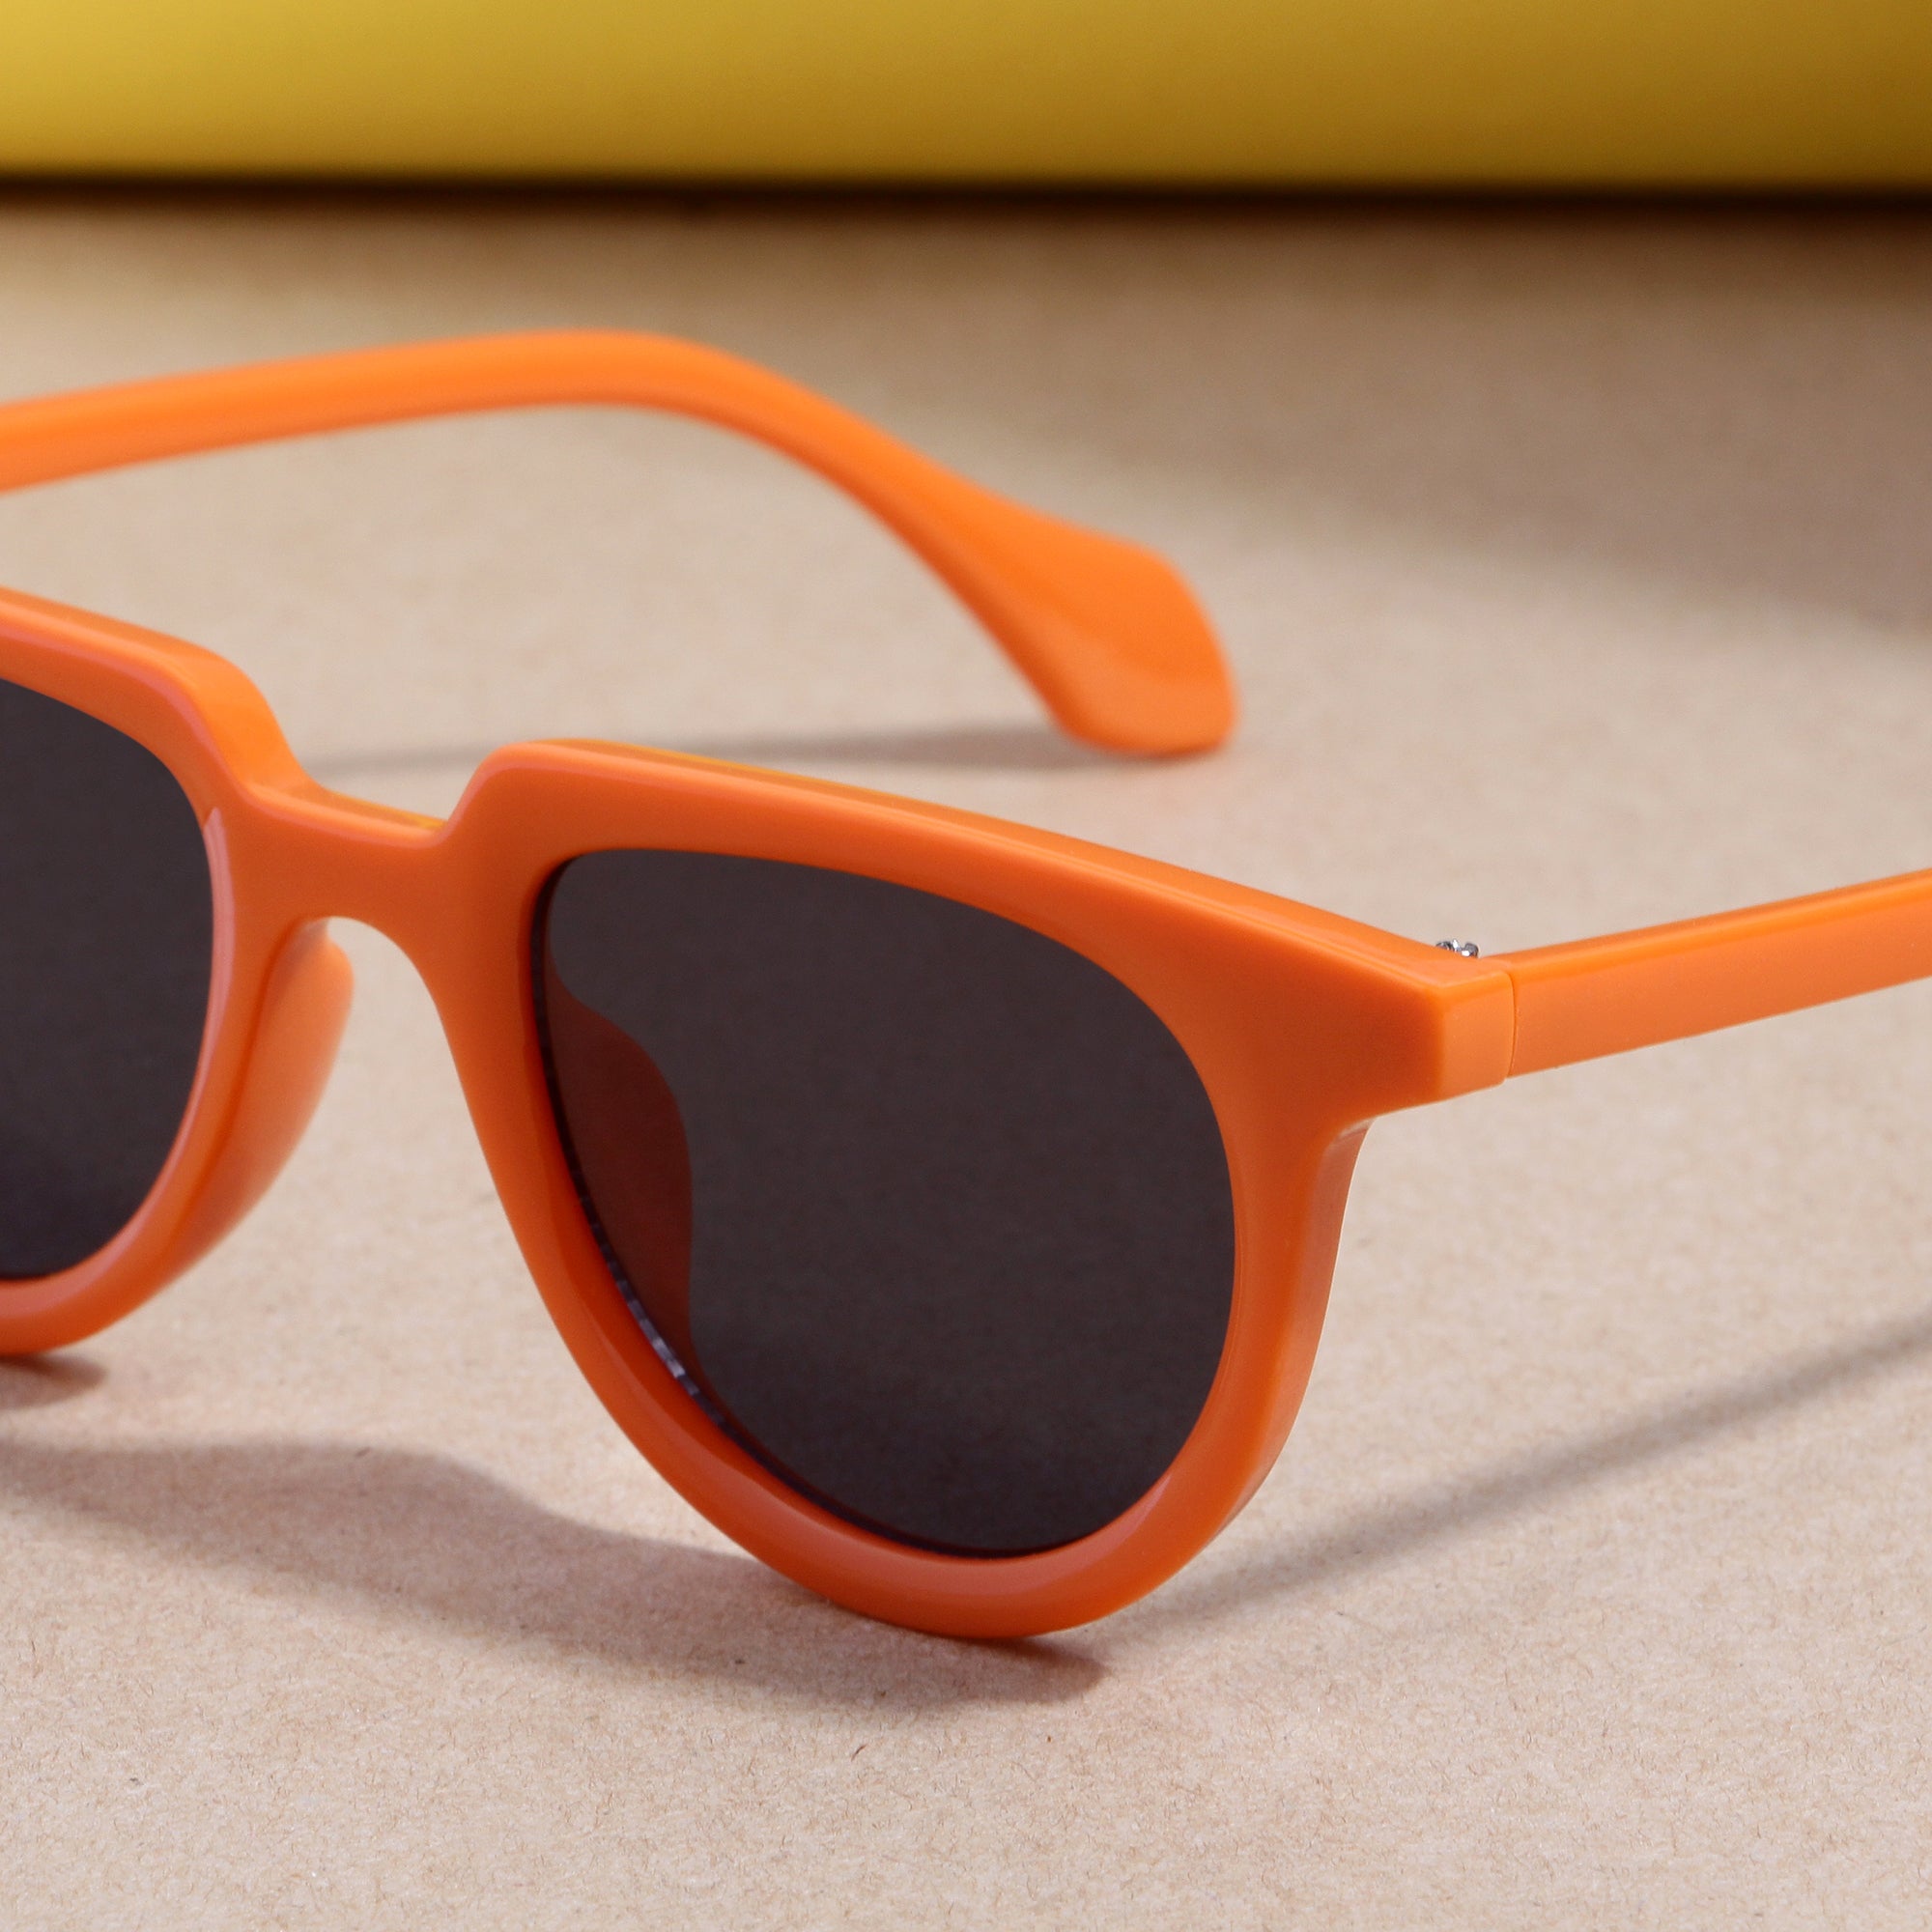 Gloviks V1 Orange and Black Sunglasses